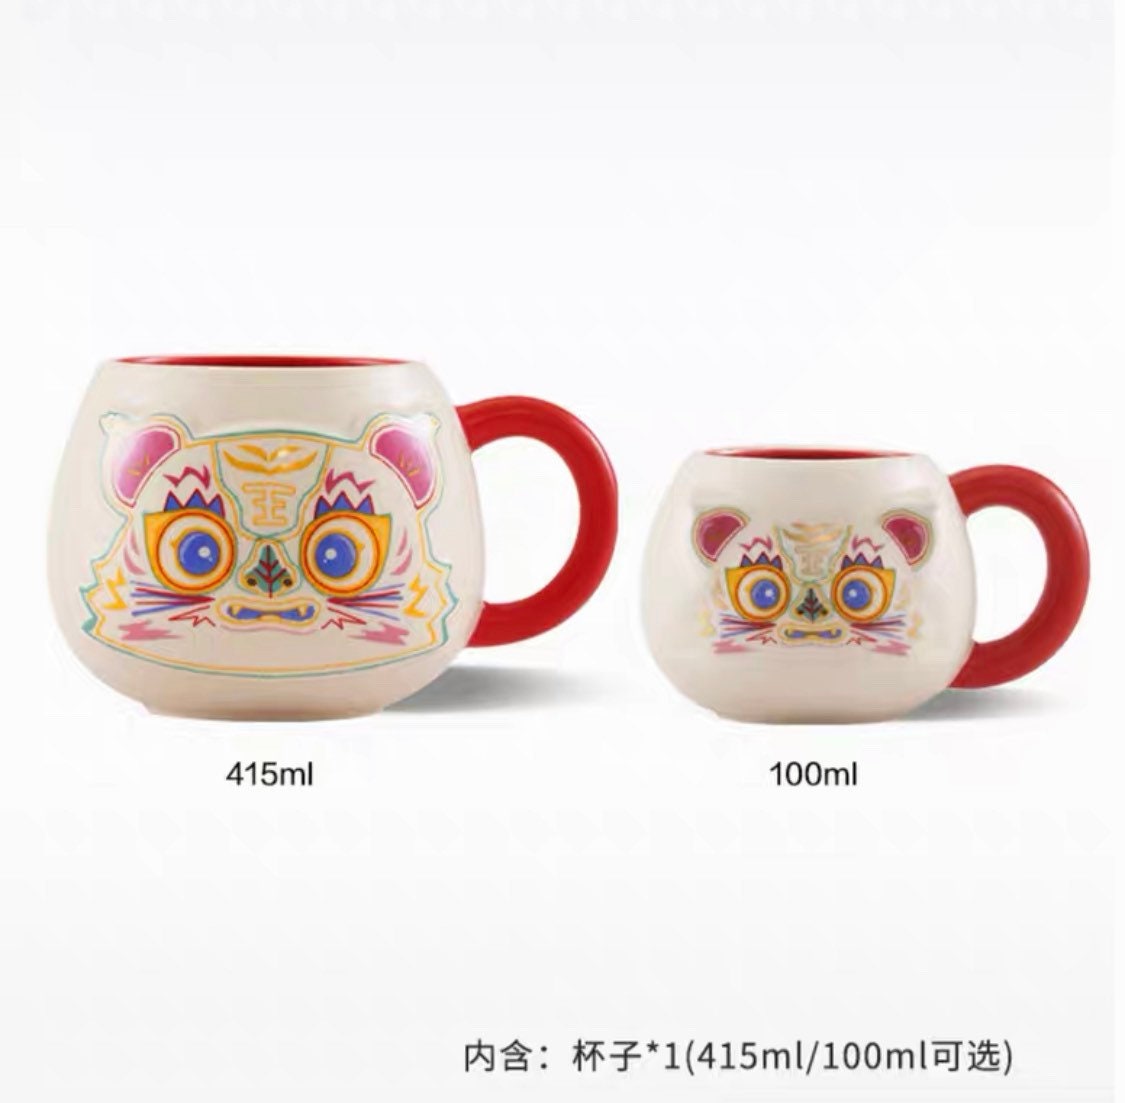 Starbucks China 100ml/415ml 2022 new year tiger series Chinese traditional white & red tiger ceramics mug